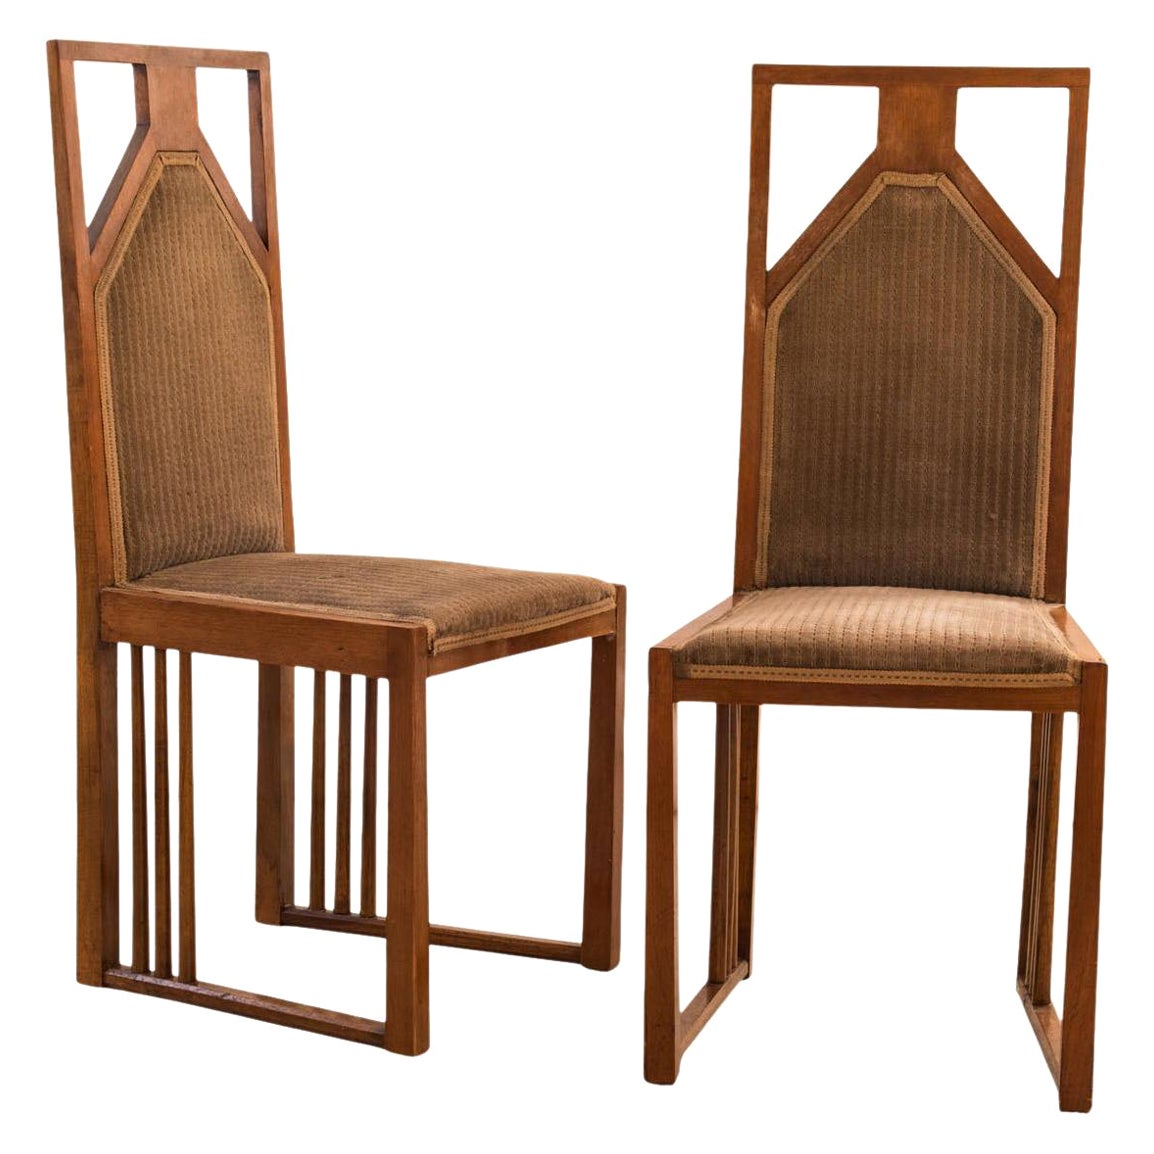 Josef Hoffmann Attr. Ein Paar außergewöhnliche Stühle 1905-10 Jugendstil-Sessel im Jugendstil, Jugendstil